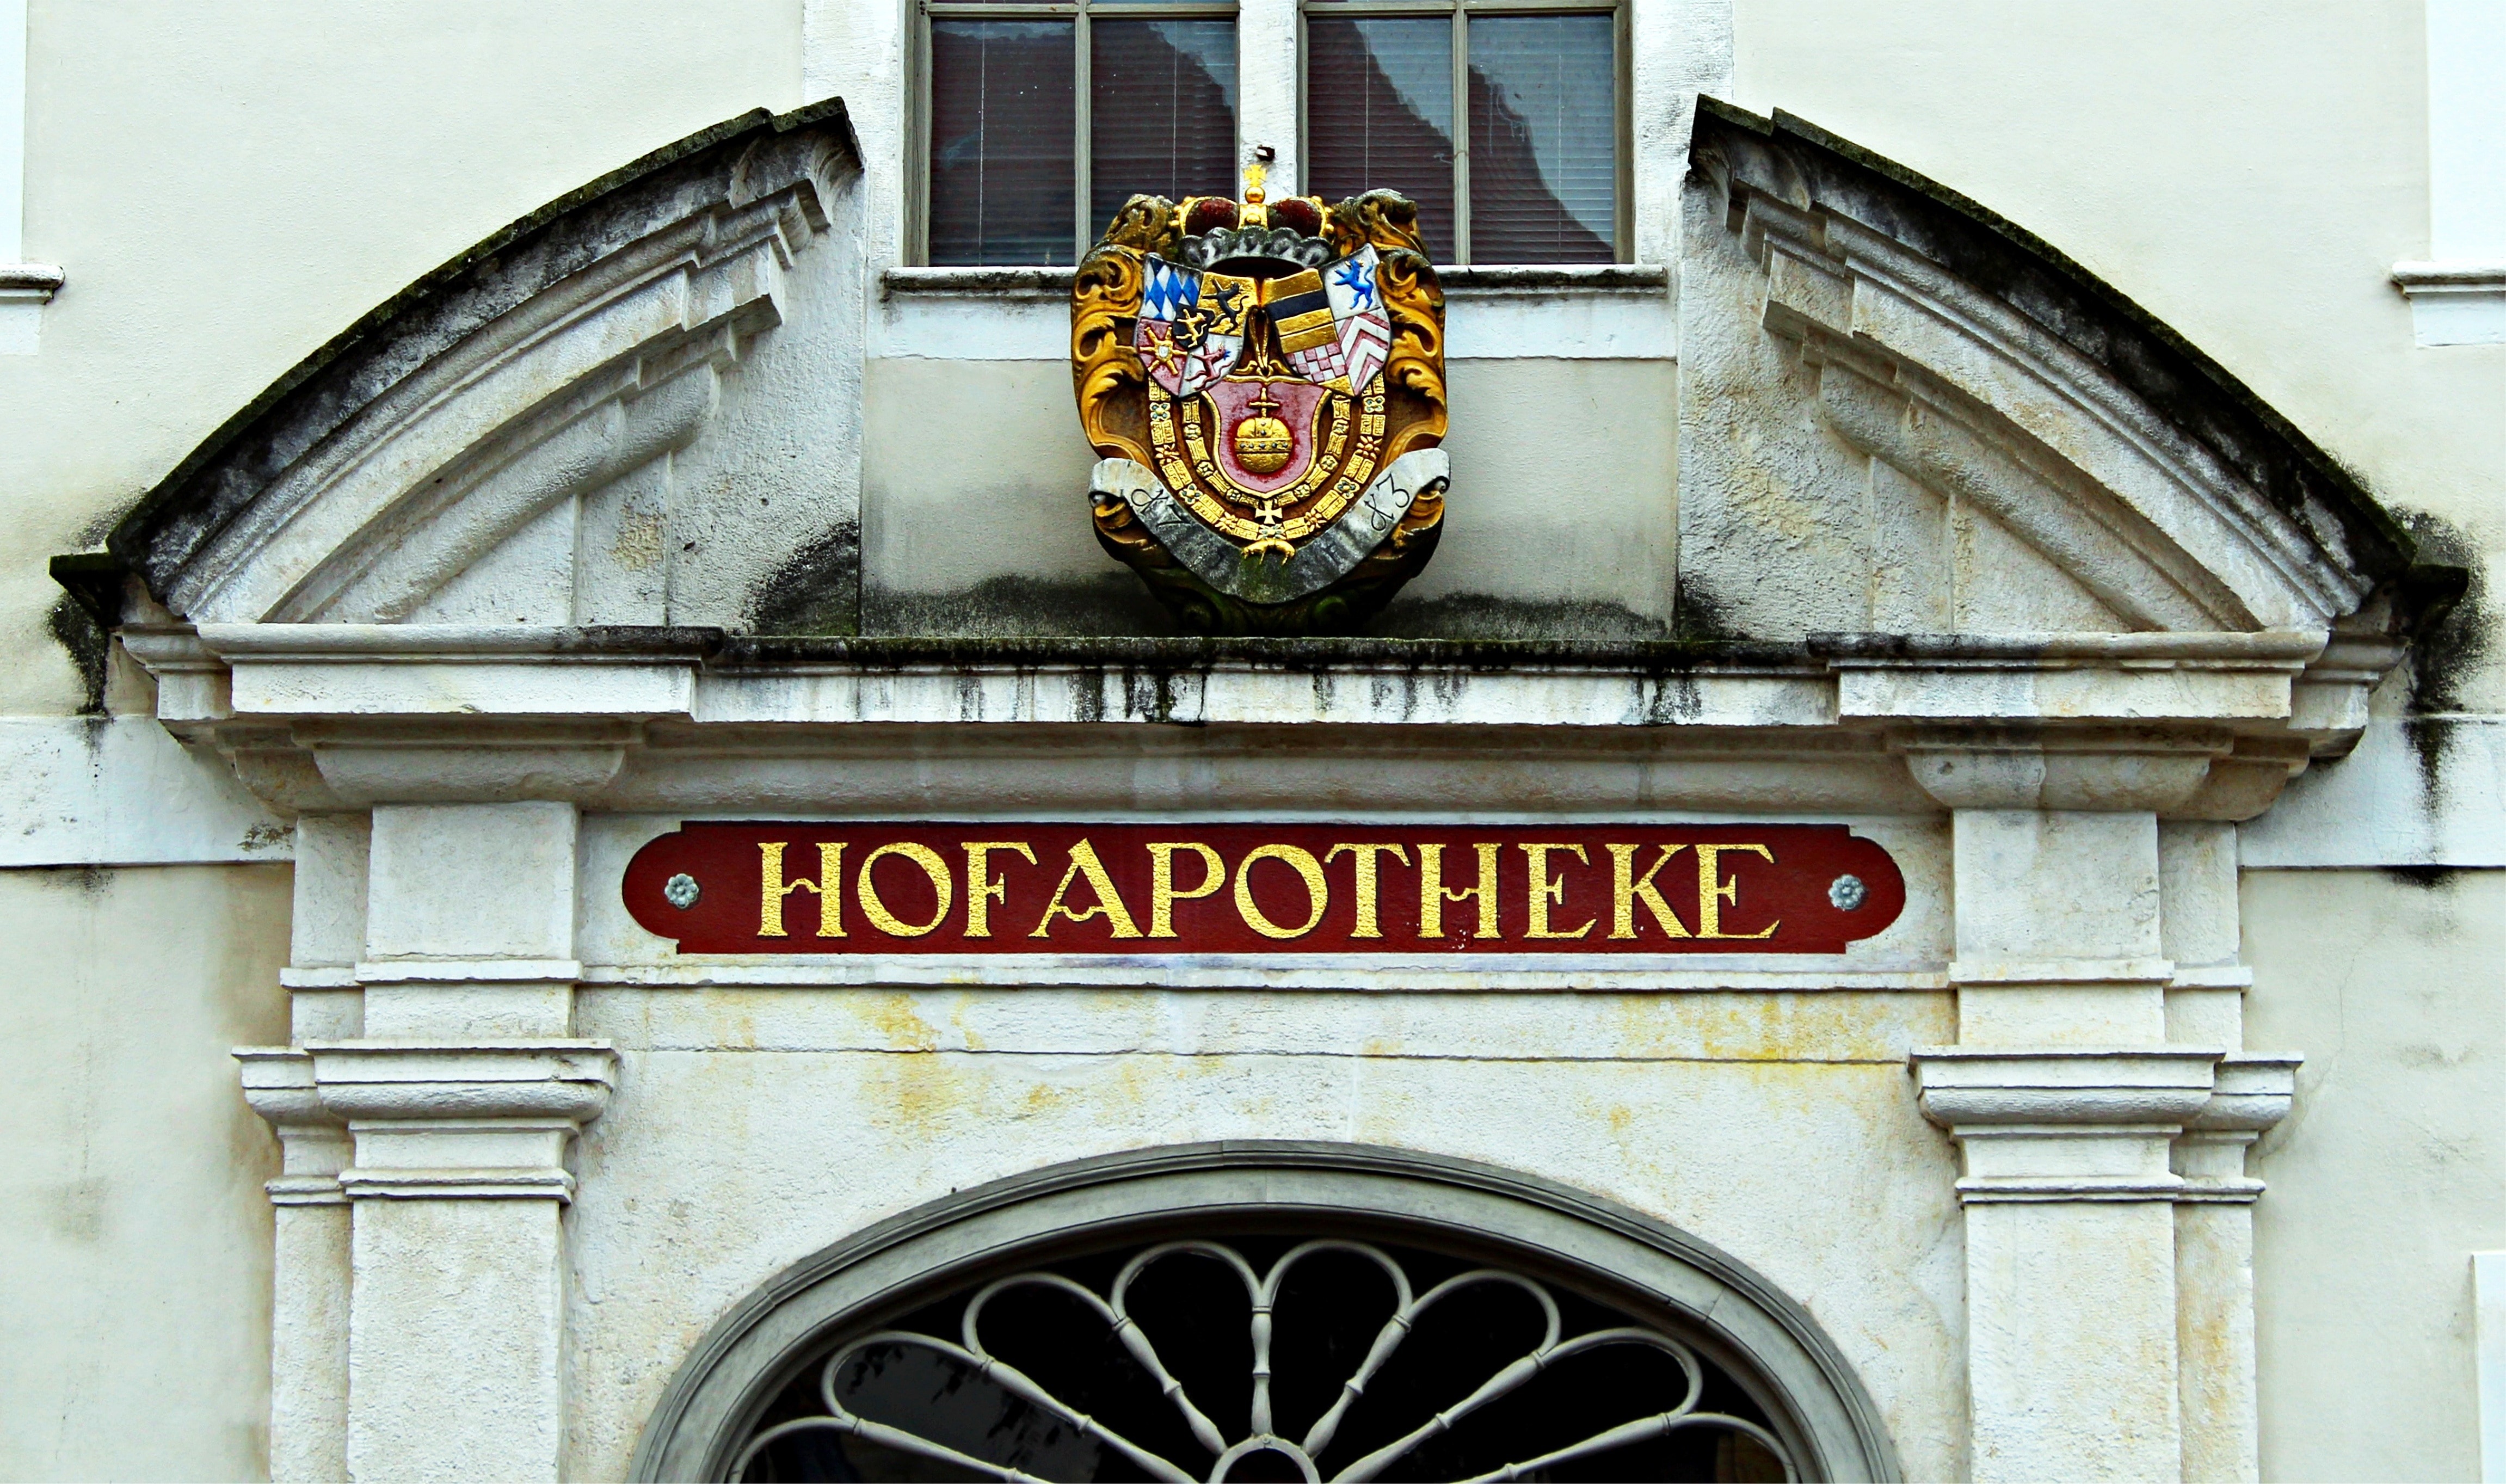 hofapotheke labeled building